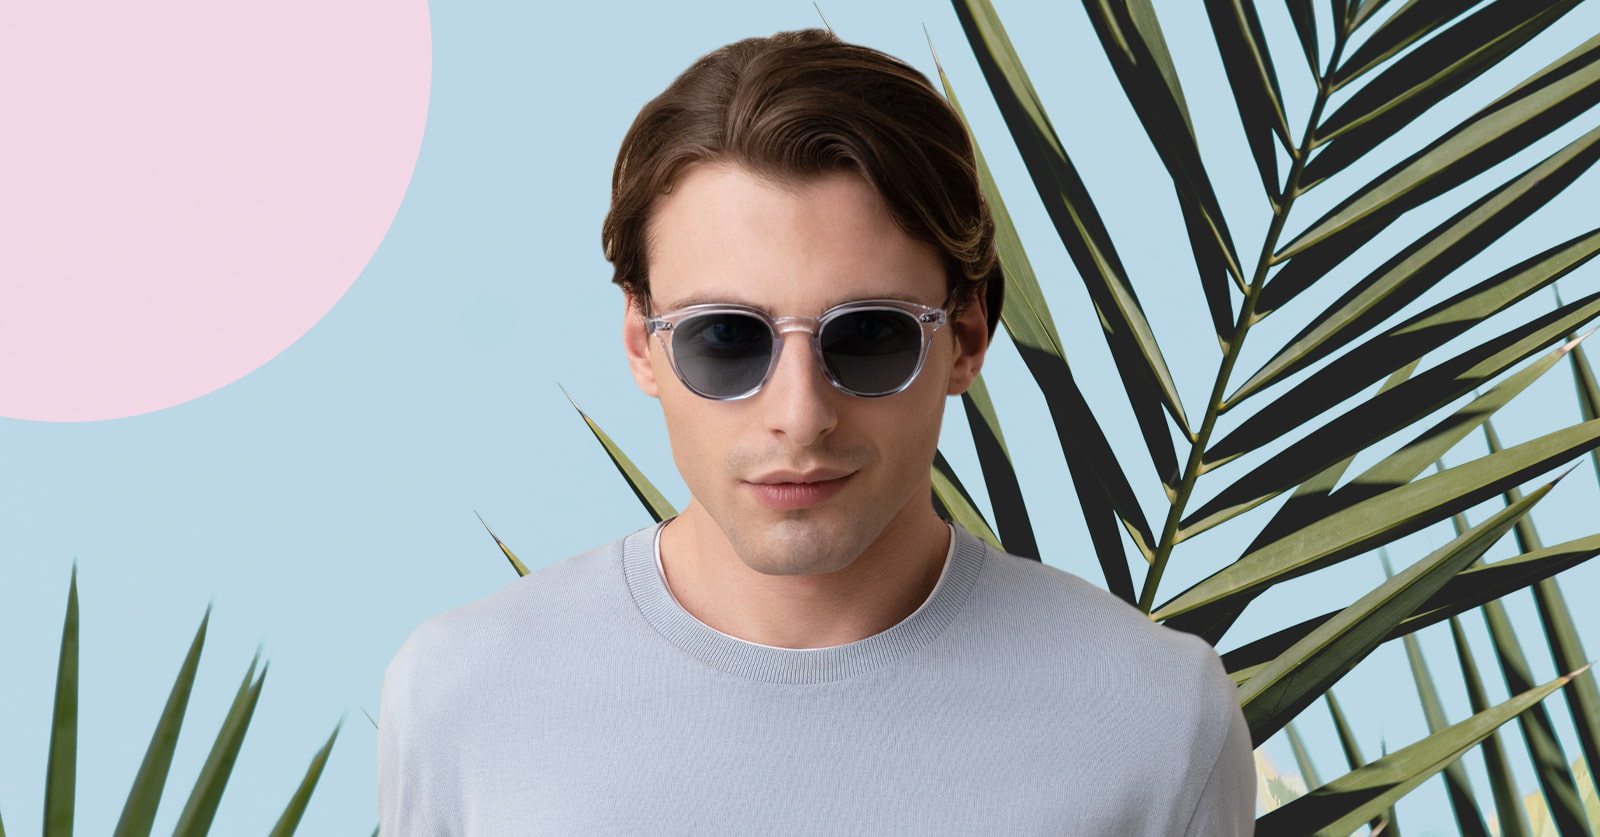 The best sunglasses for men in 2022